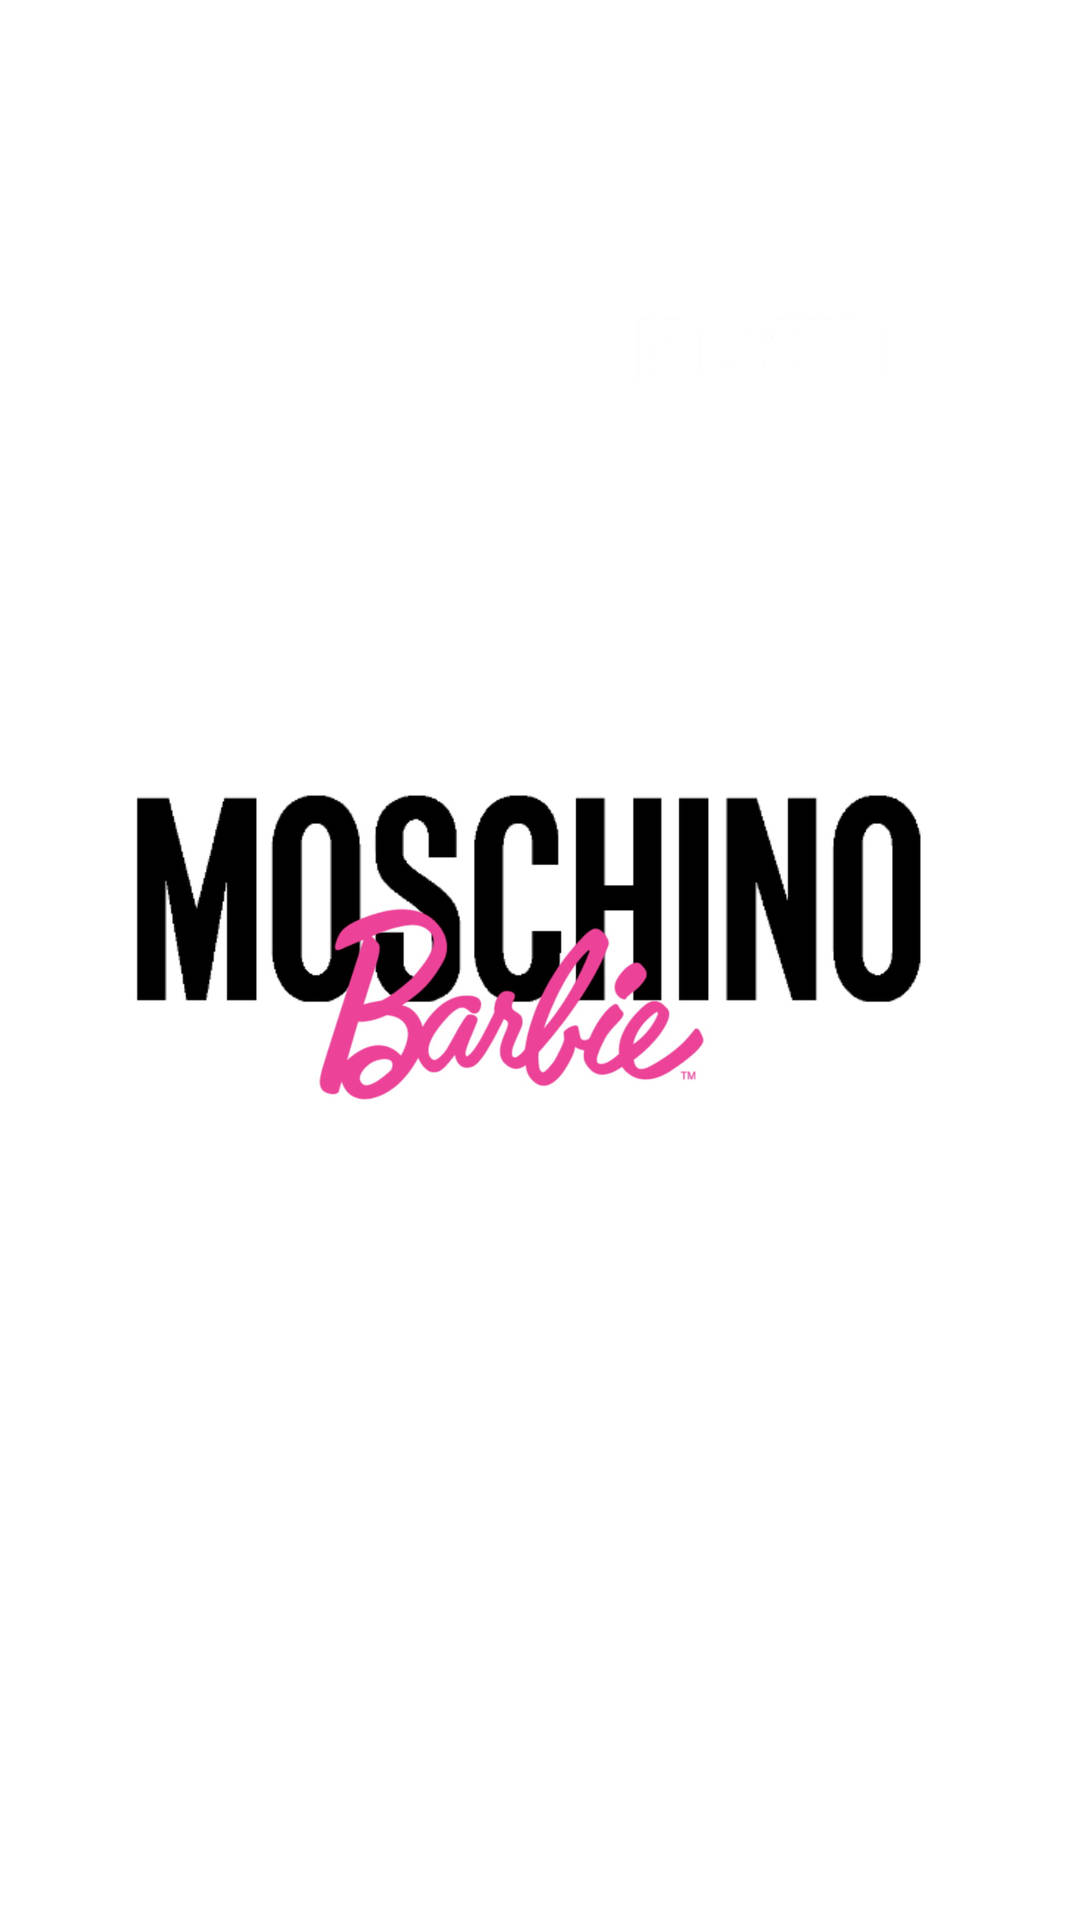 Moschino Barbie Background